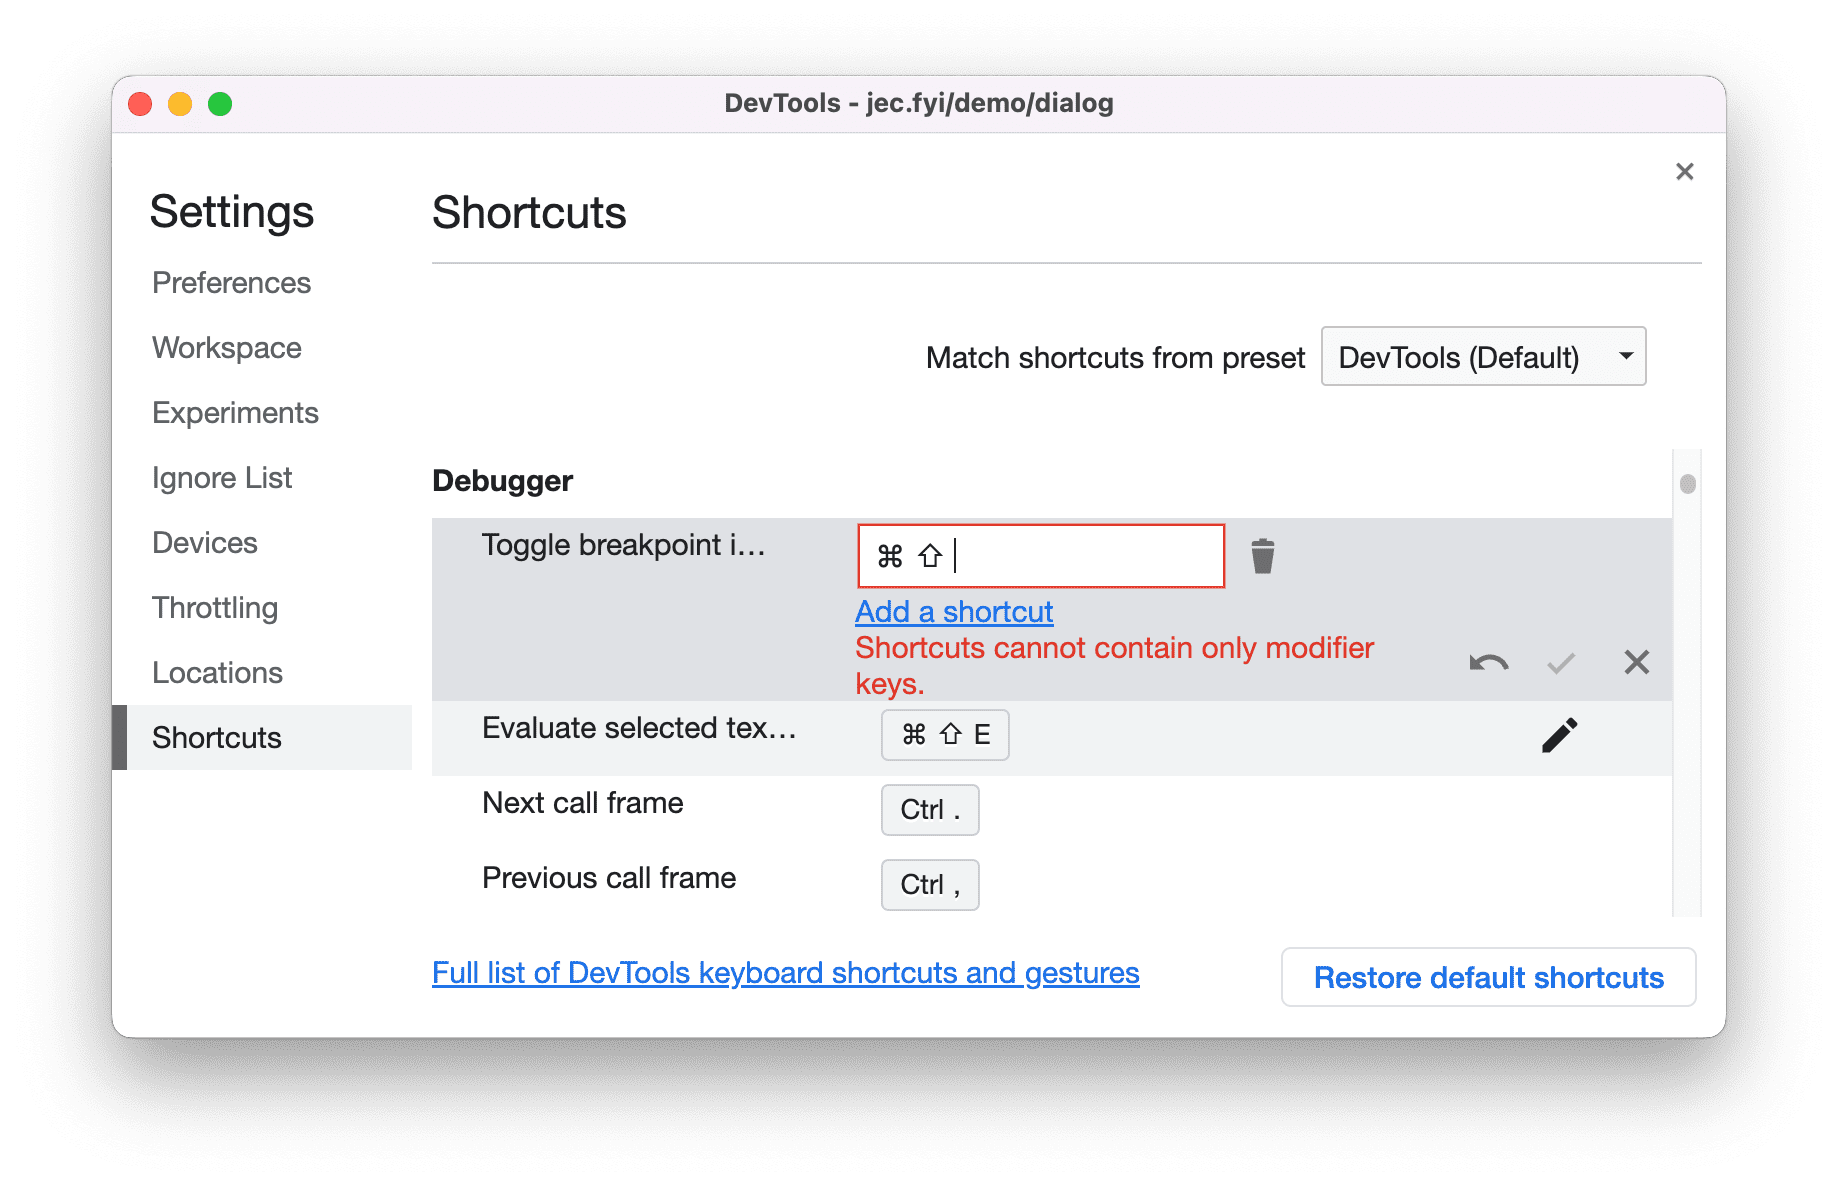 Customize keyboard shortcuts in DevTools.